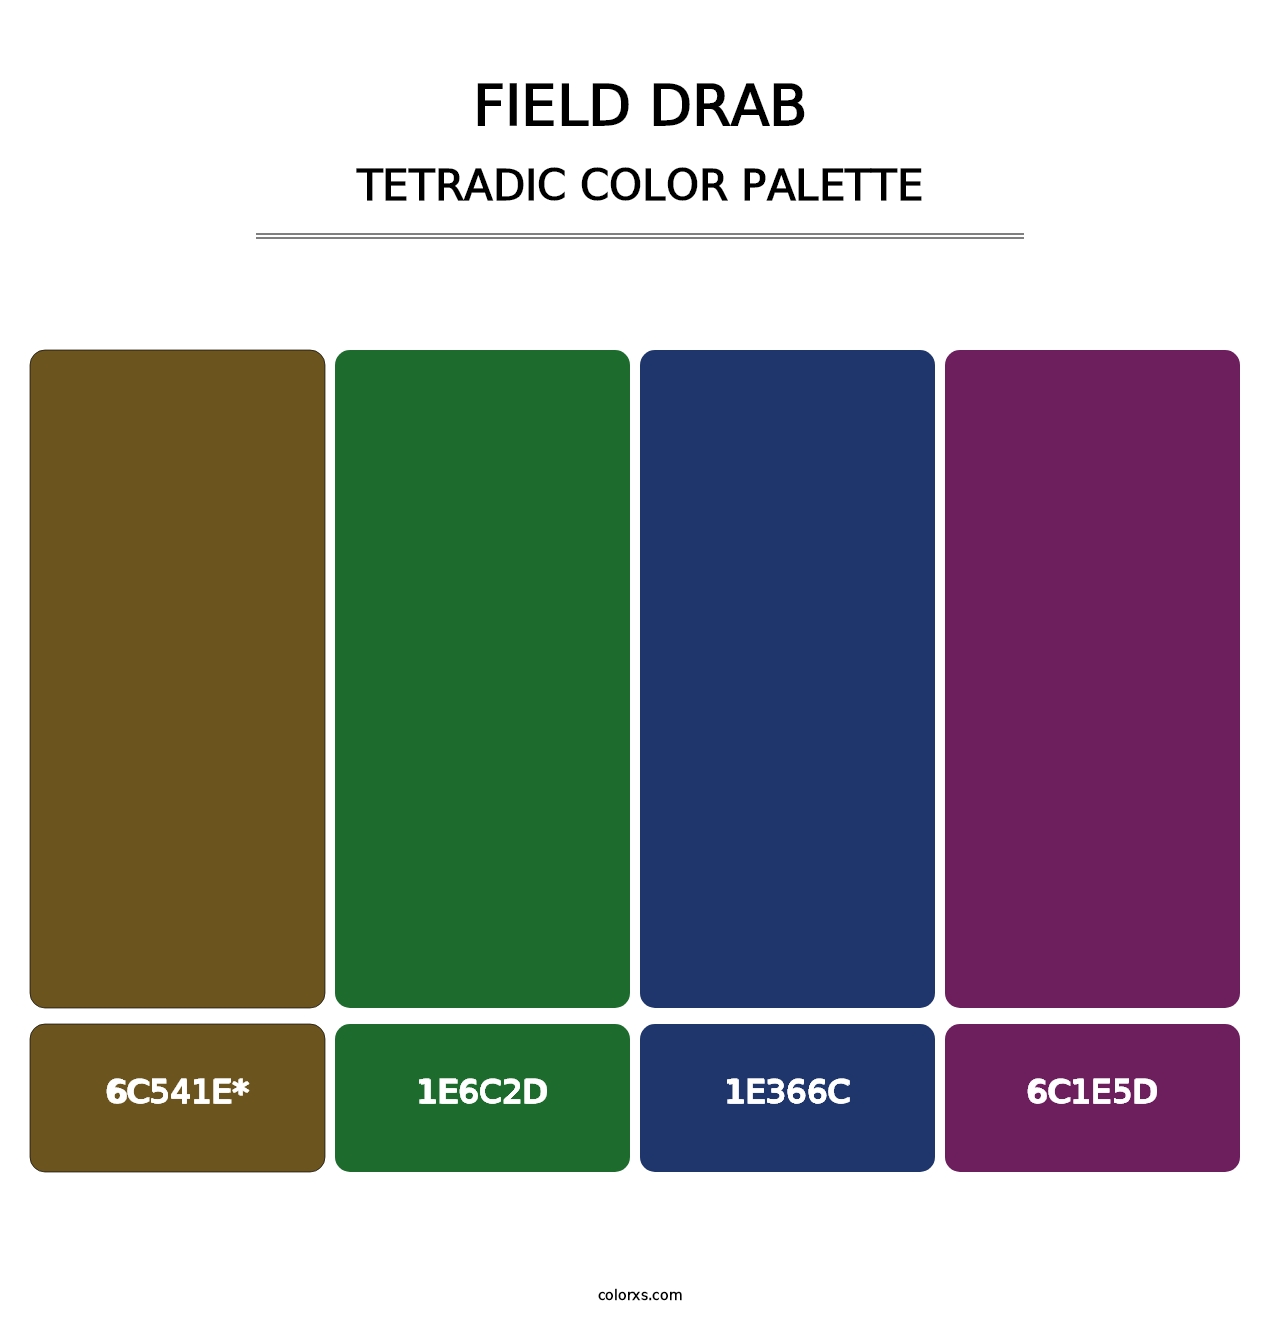 Field Drab - Tetradic Color Palette